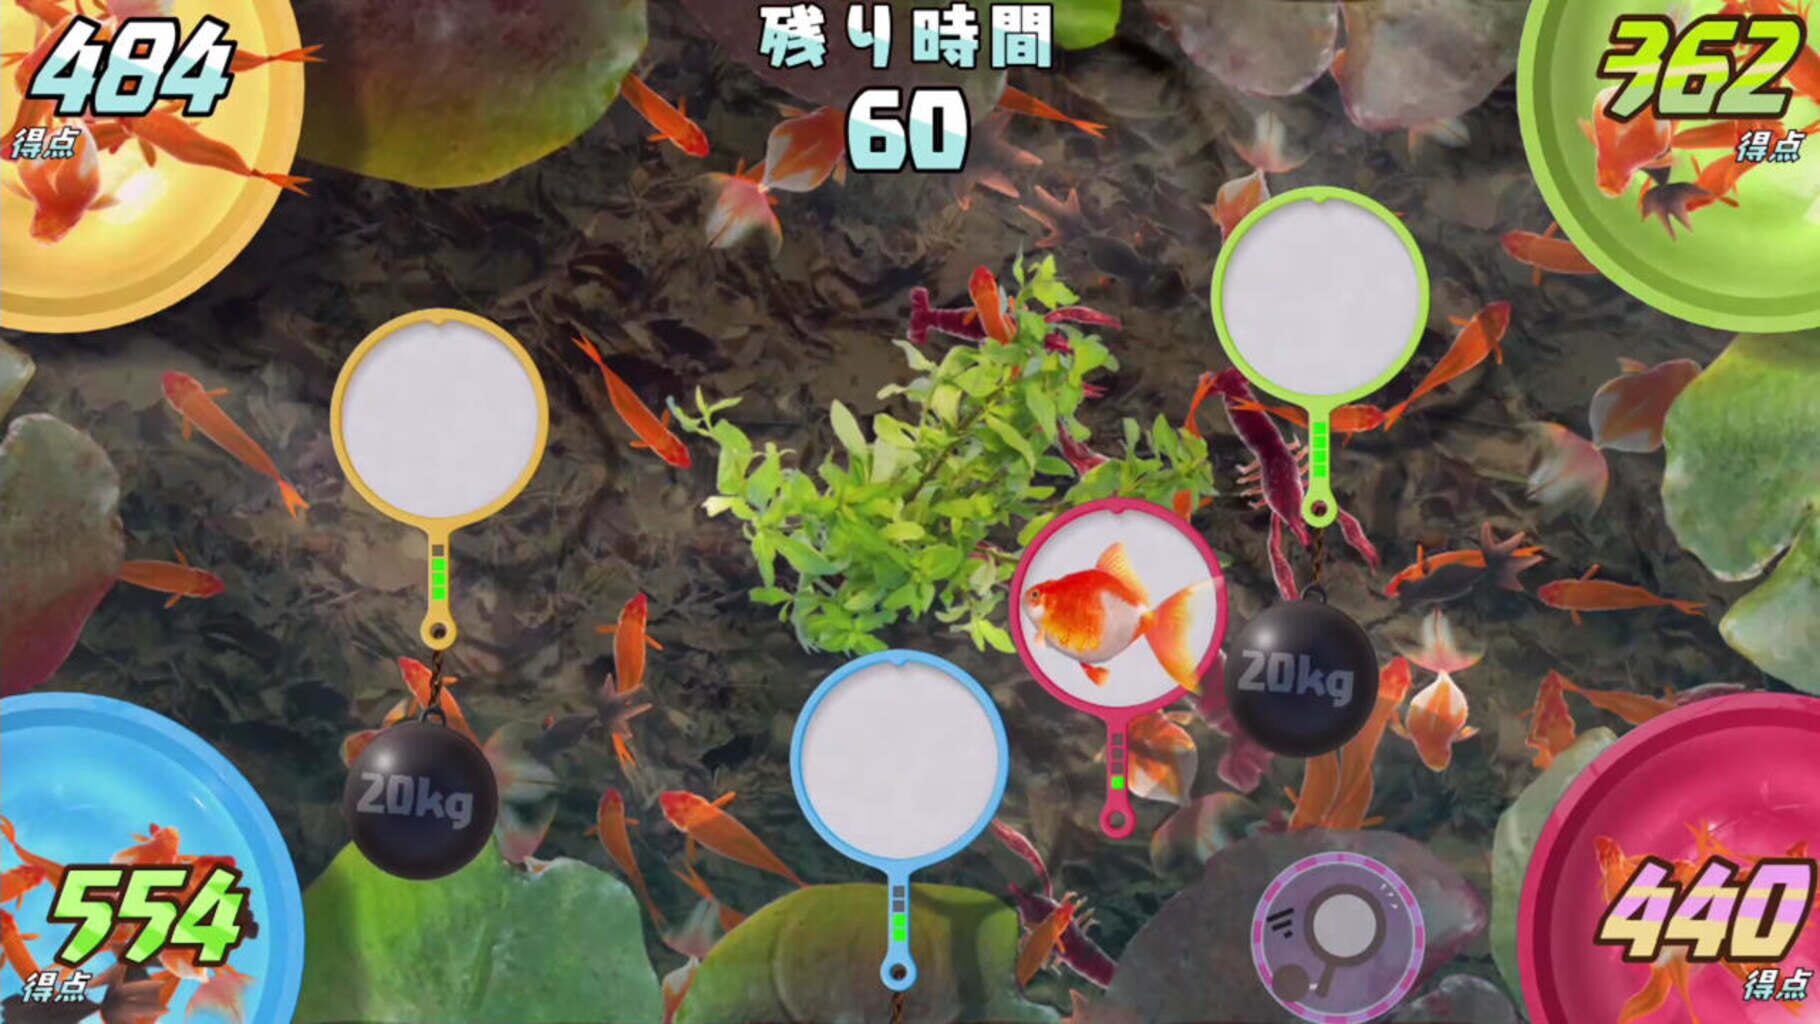 Catch 'Em! Goldfish Scooping screenshot